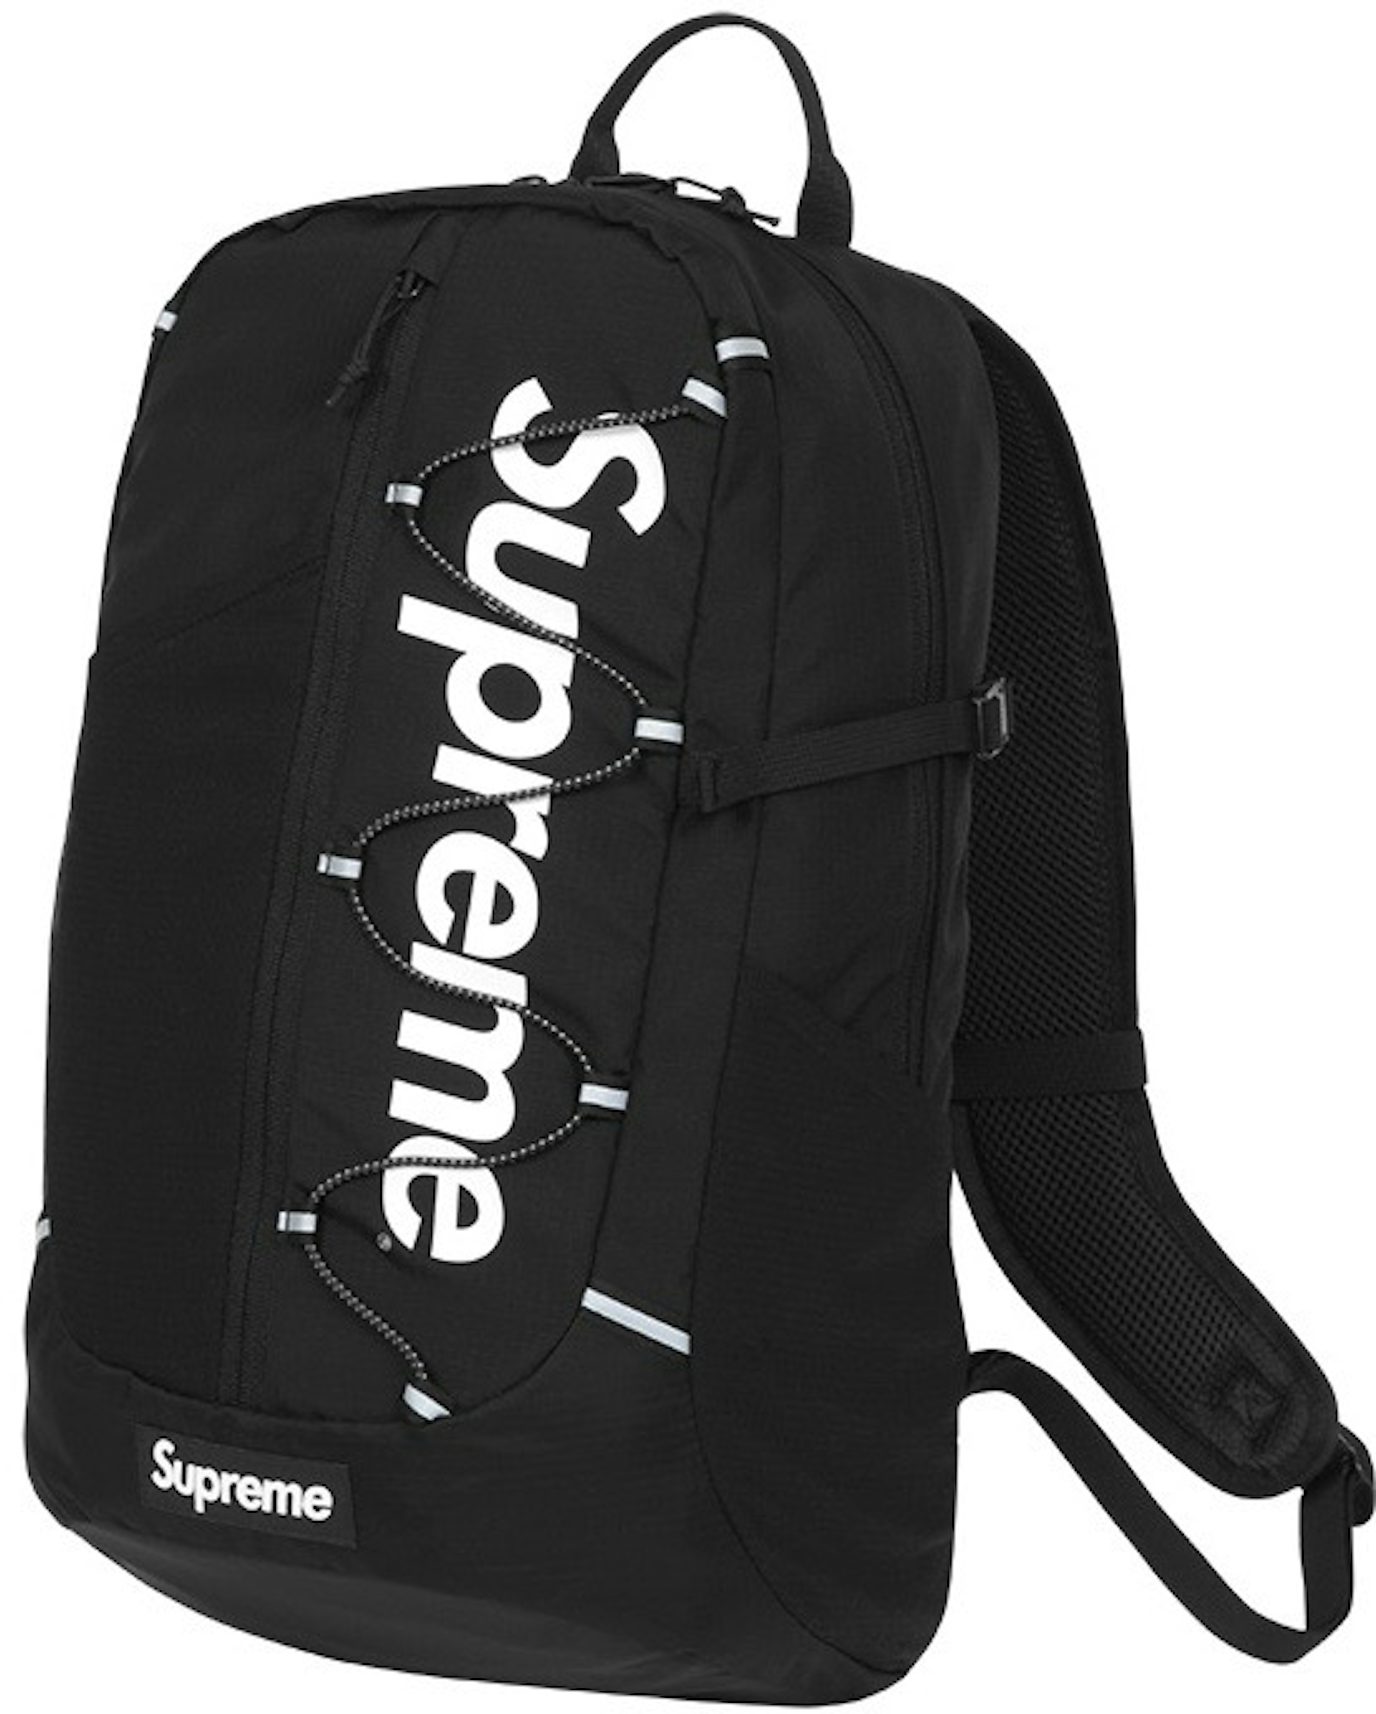 NWT Supreme Backpack Black SS21  Black backpack, Supreme backpack